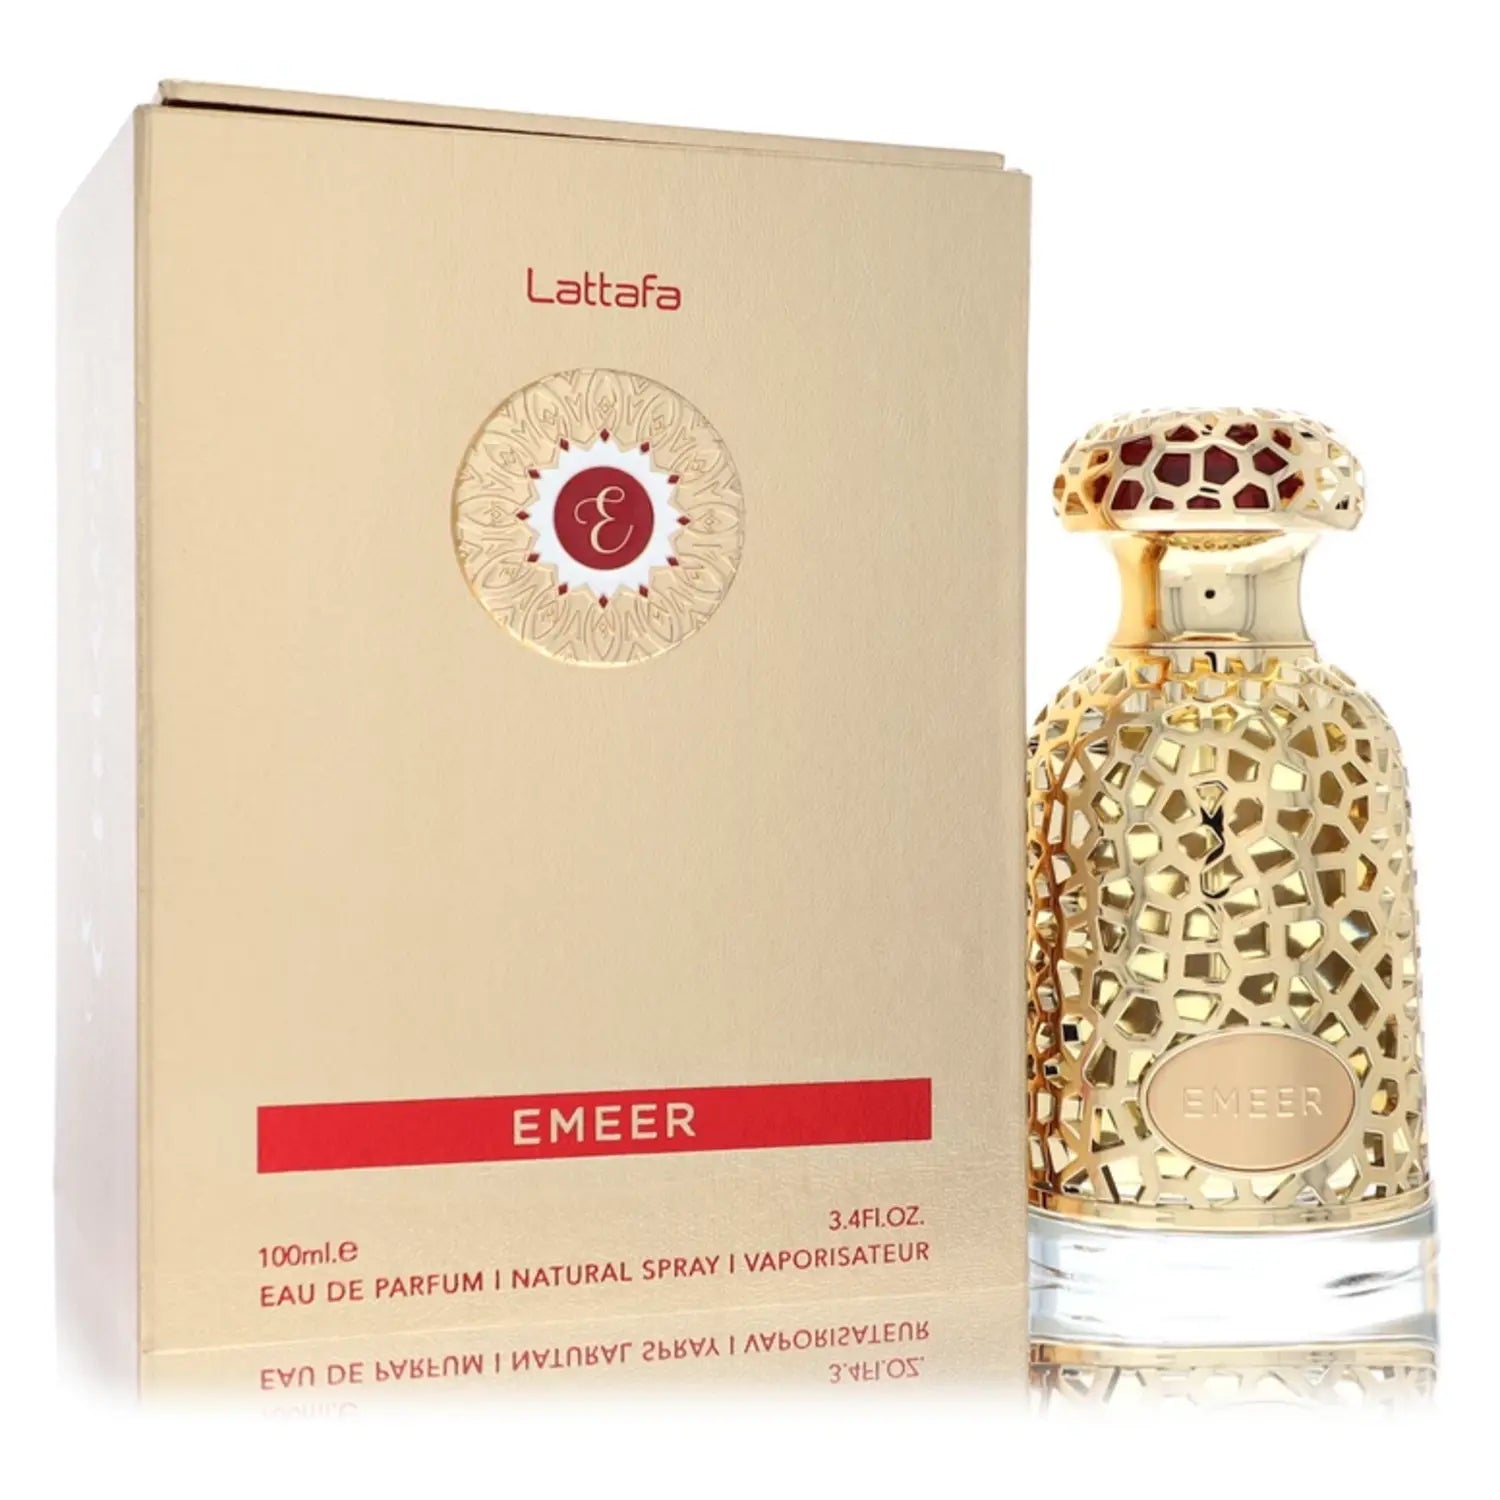 Emeer by Lattafa Perfumes 3.4 oz EDP Spray U